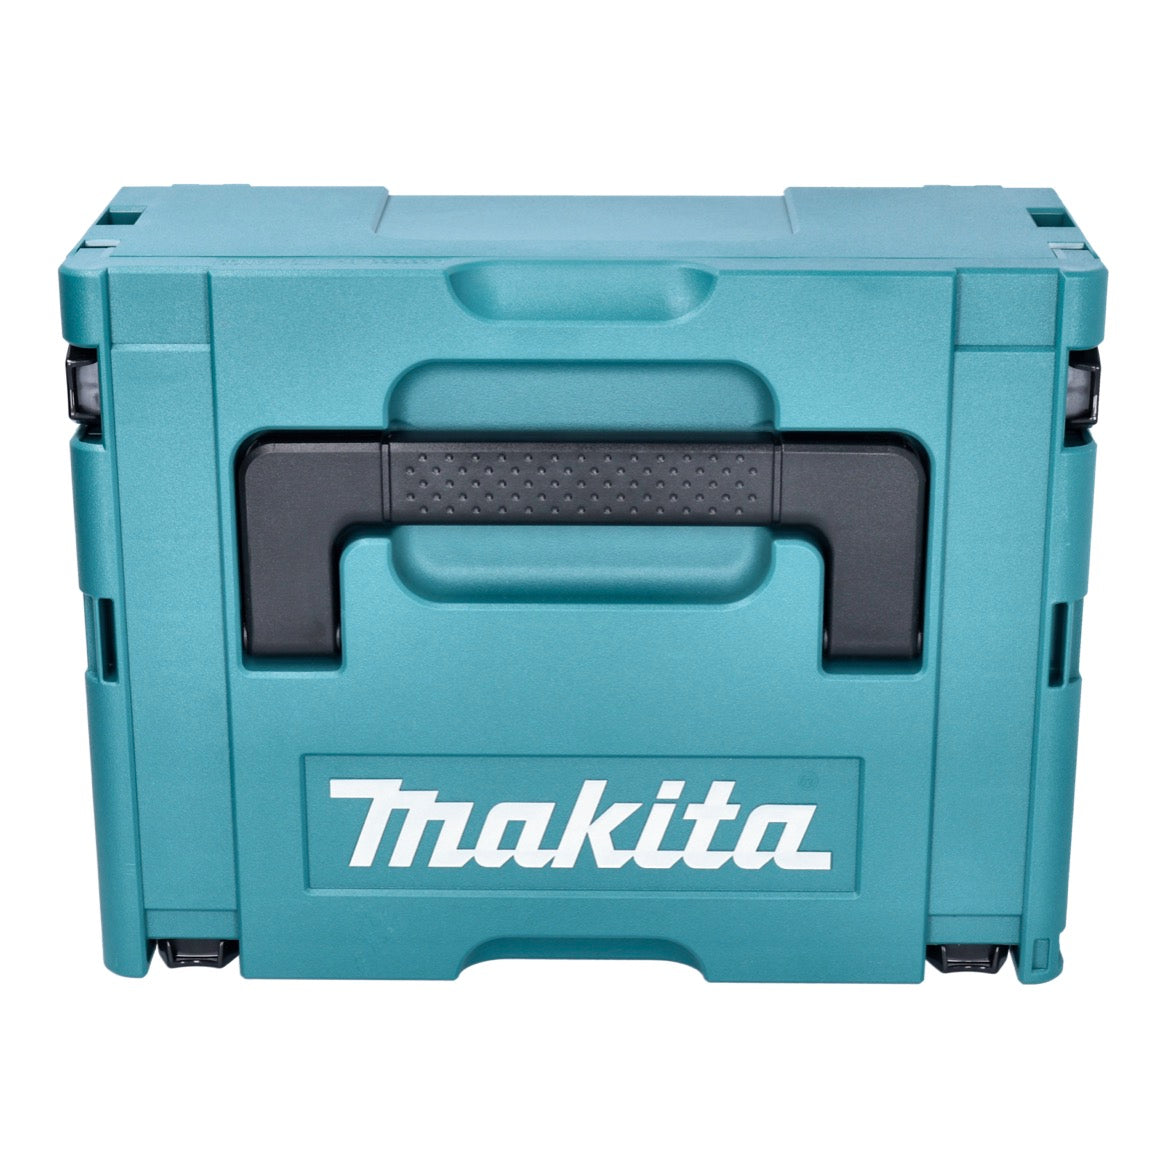 Makita BO 5041 J Exzenterschleifer Schleifmaschine 300 W 125 mm + Toolbrothers SPIDER Schleifset Netzschleifmittel + Makpac - Toolbrothers